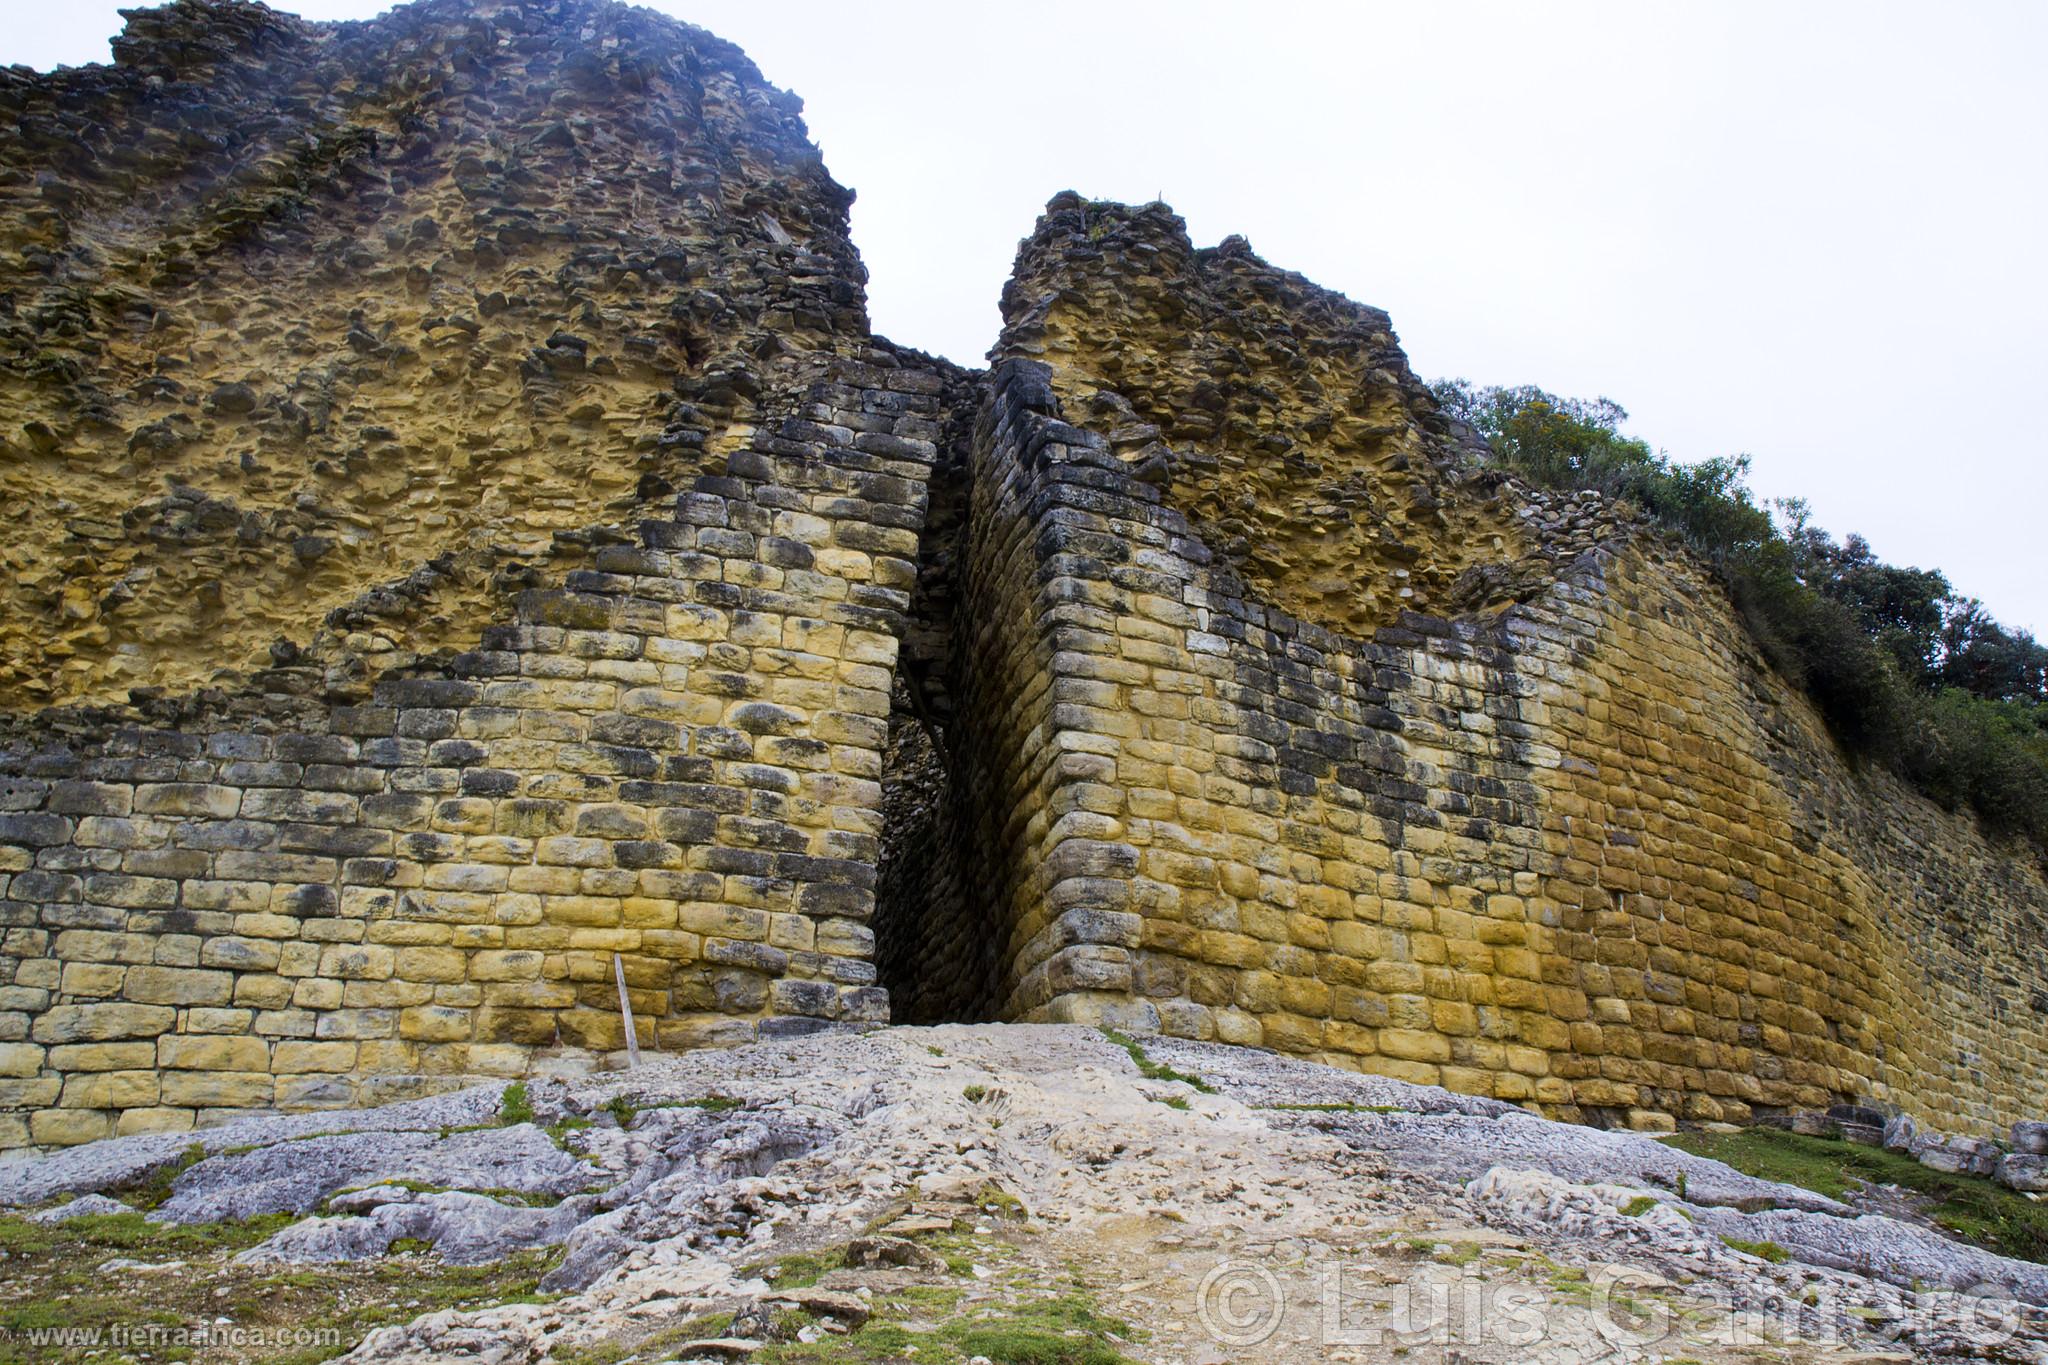 Fortaleza de Kuelap, Kuélap